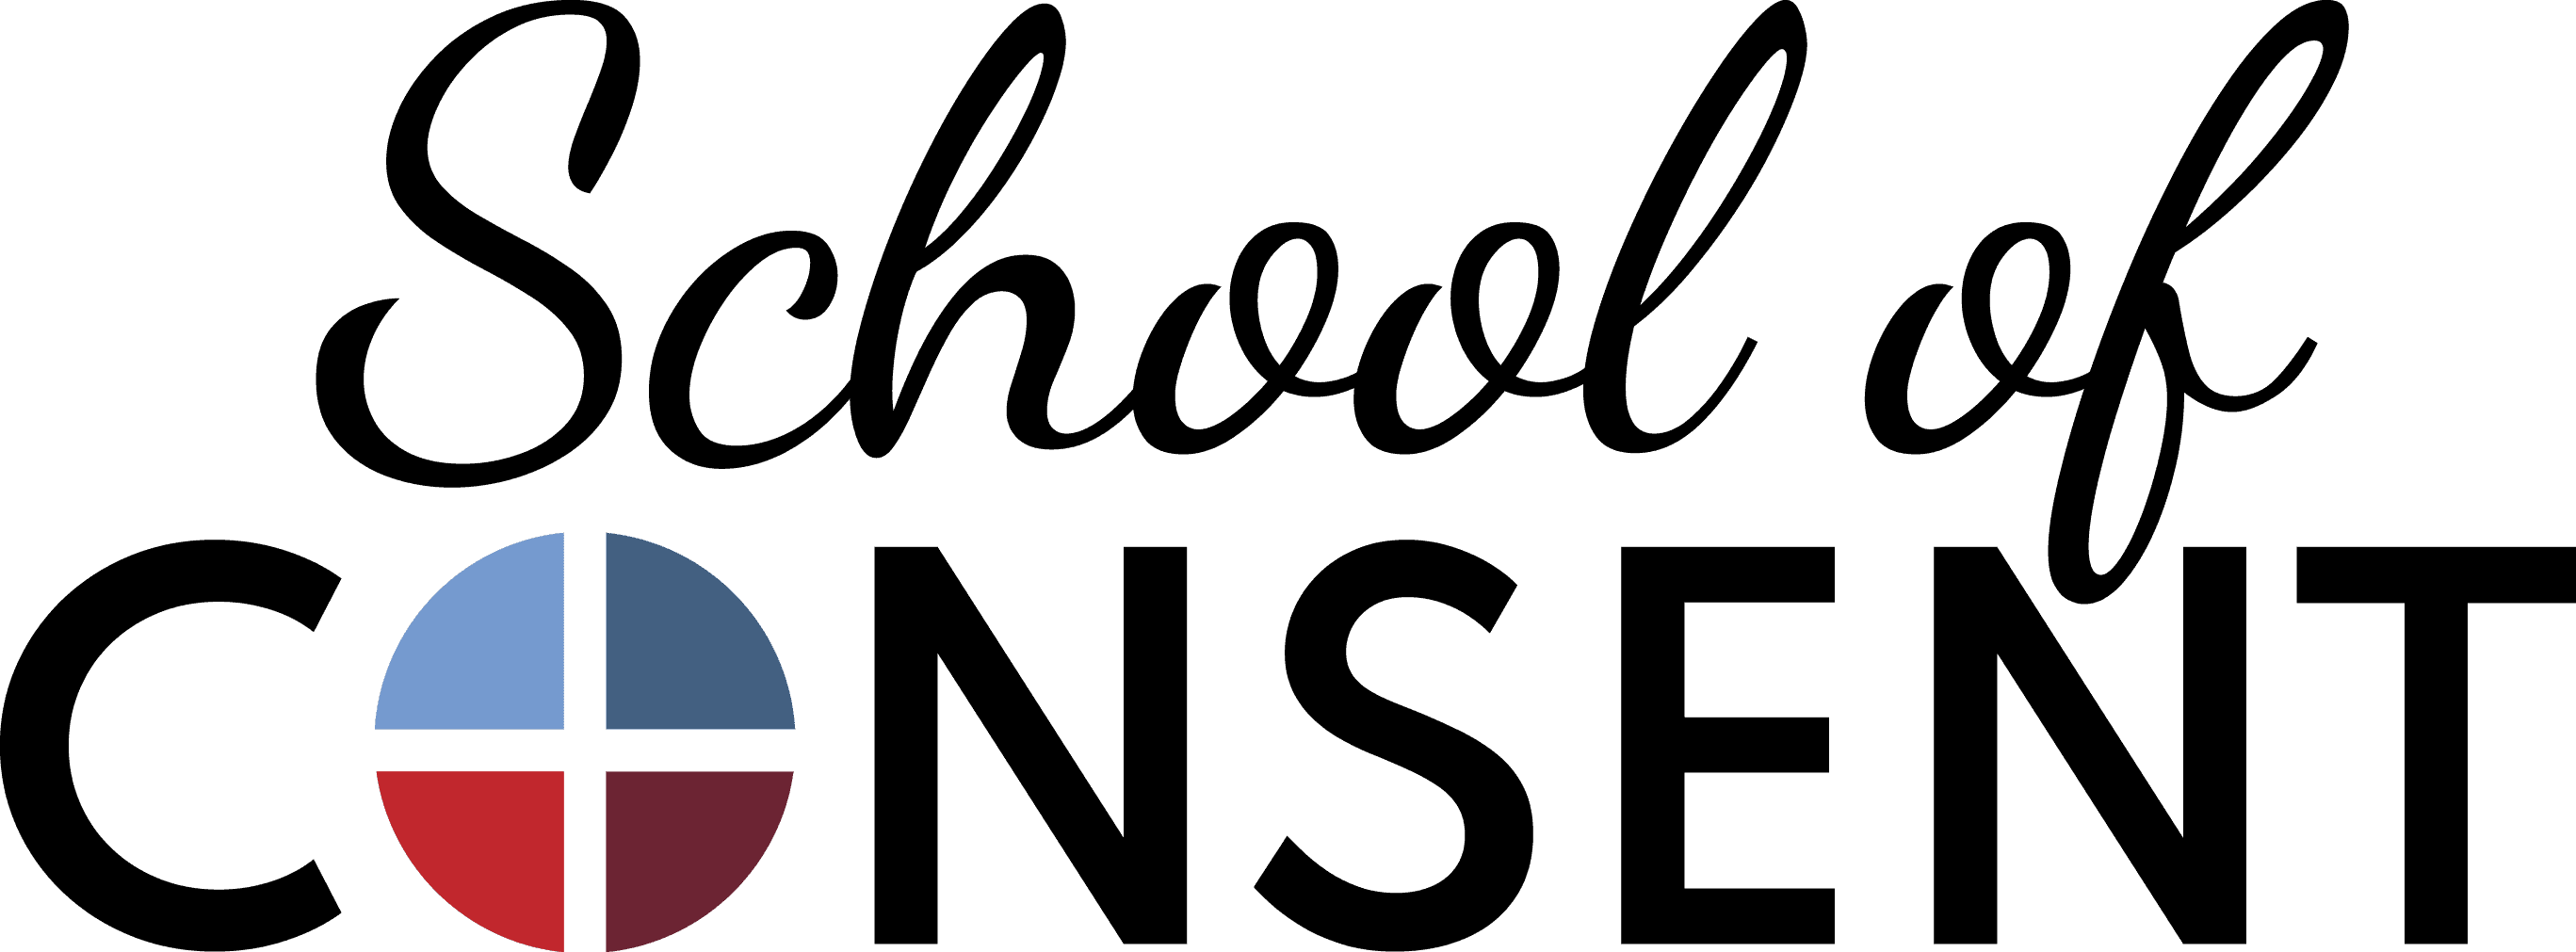 School Of Consent logo